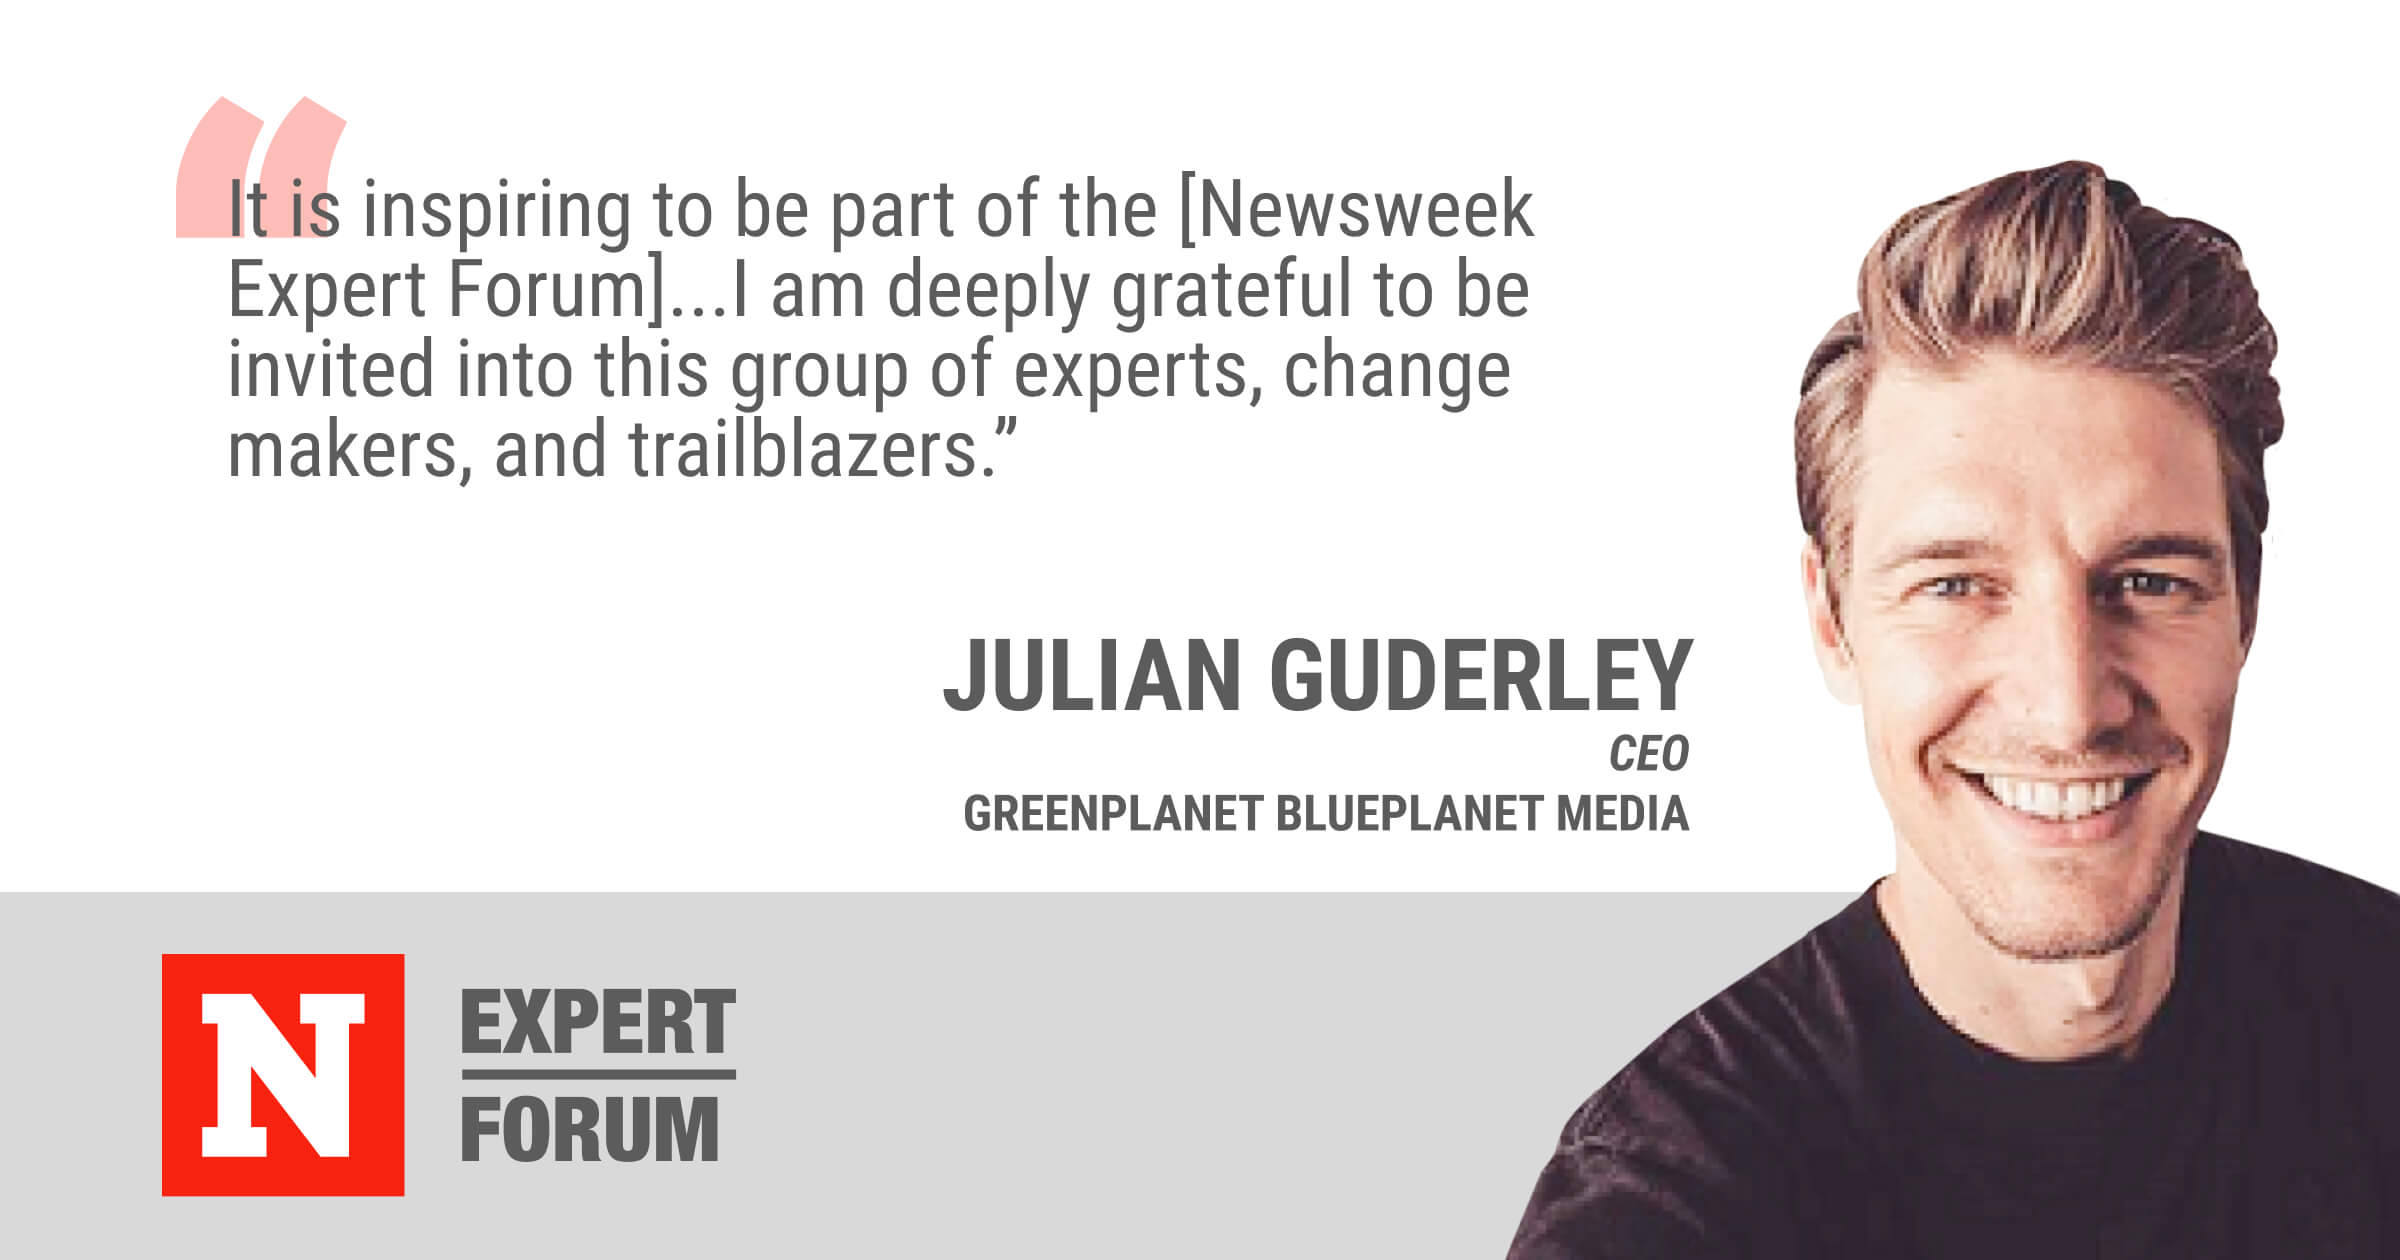 Julian Guderley, C-E-O of Greenplanet Blueprint Media